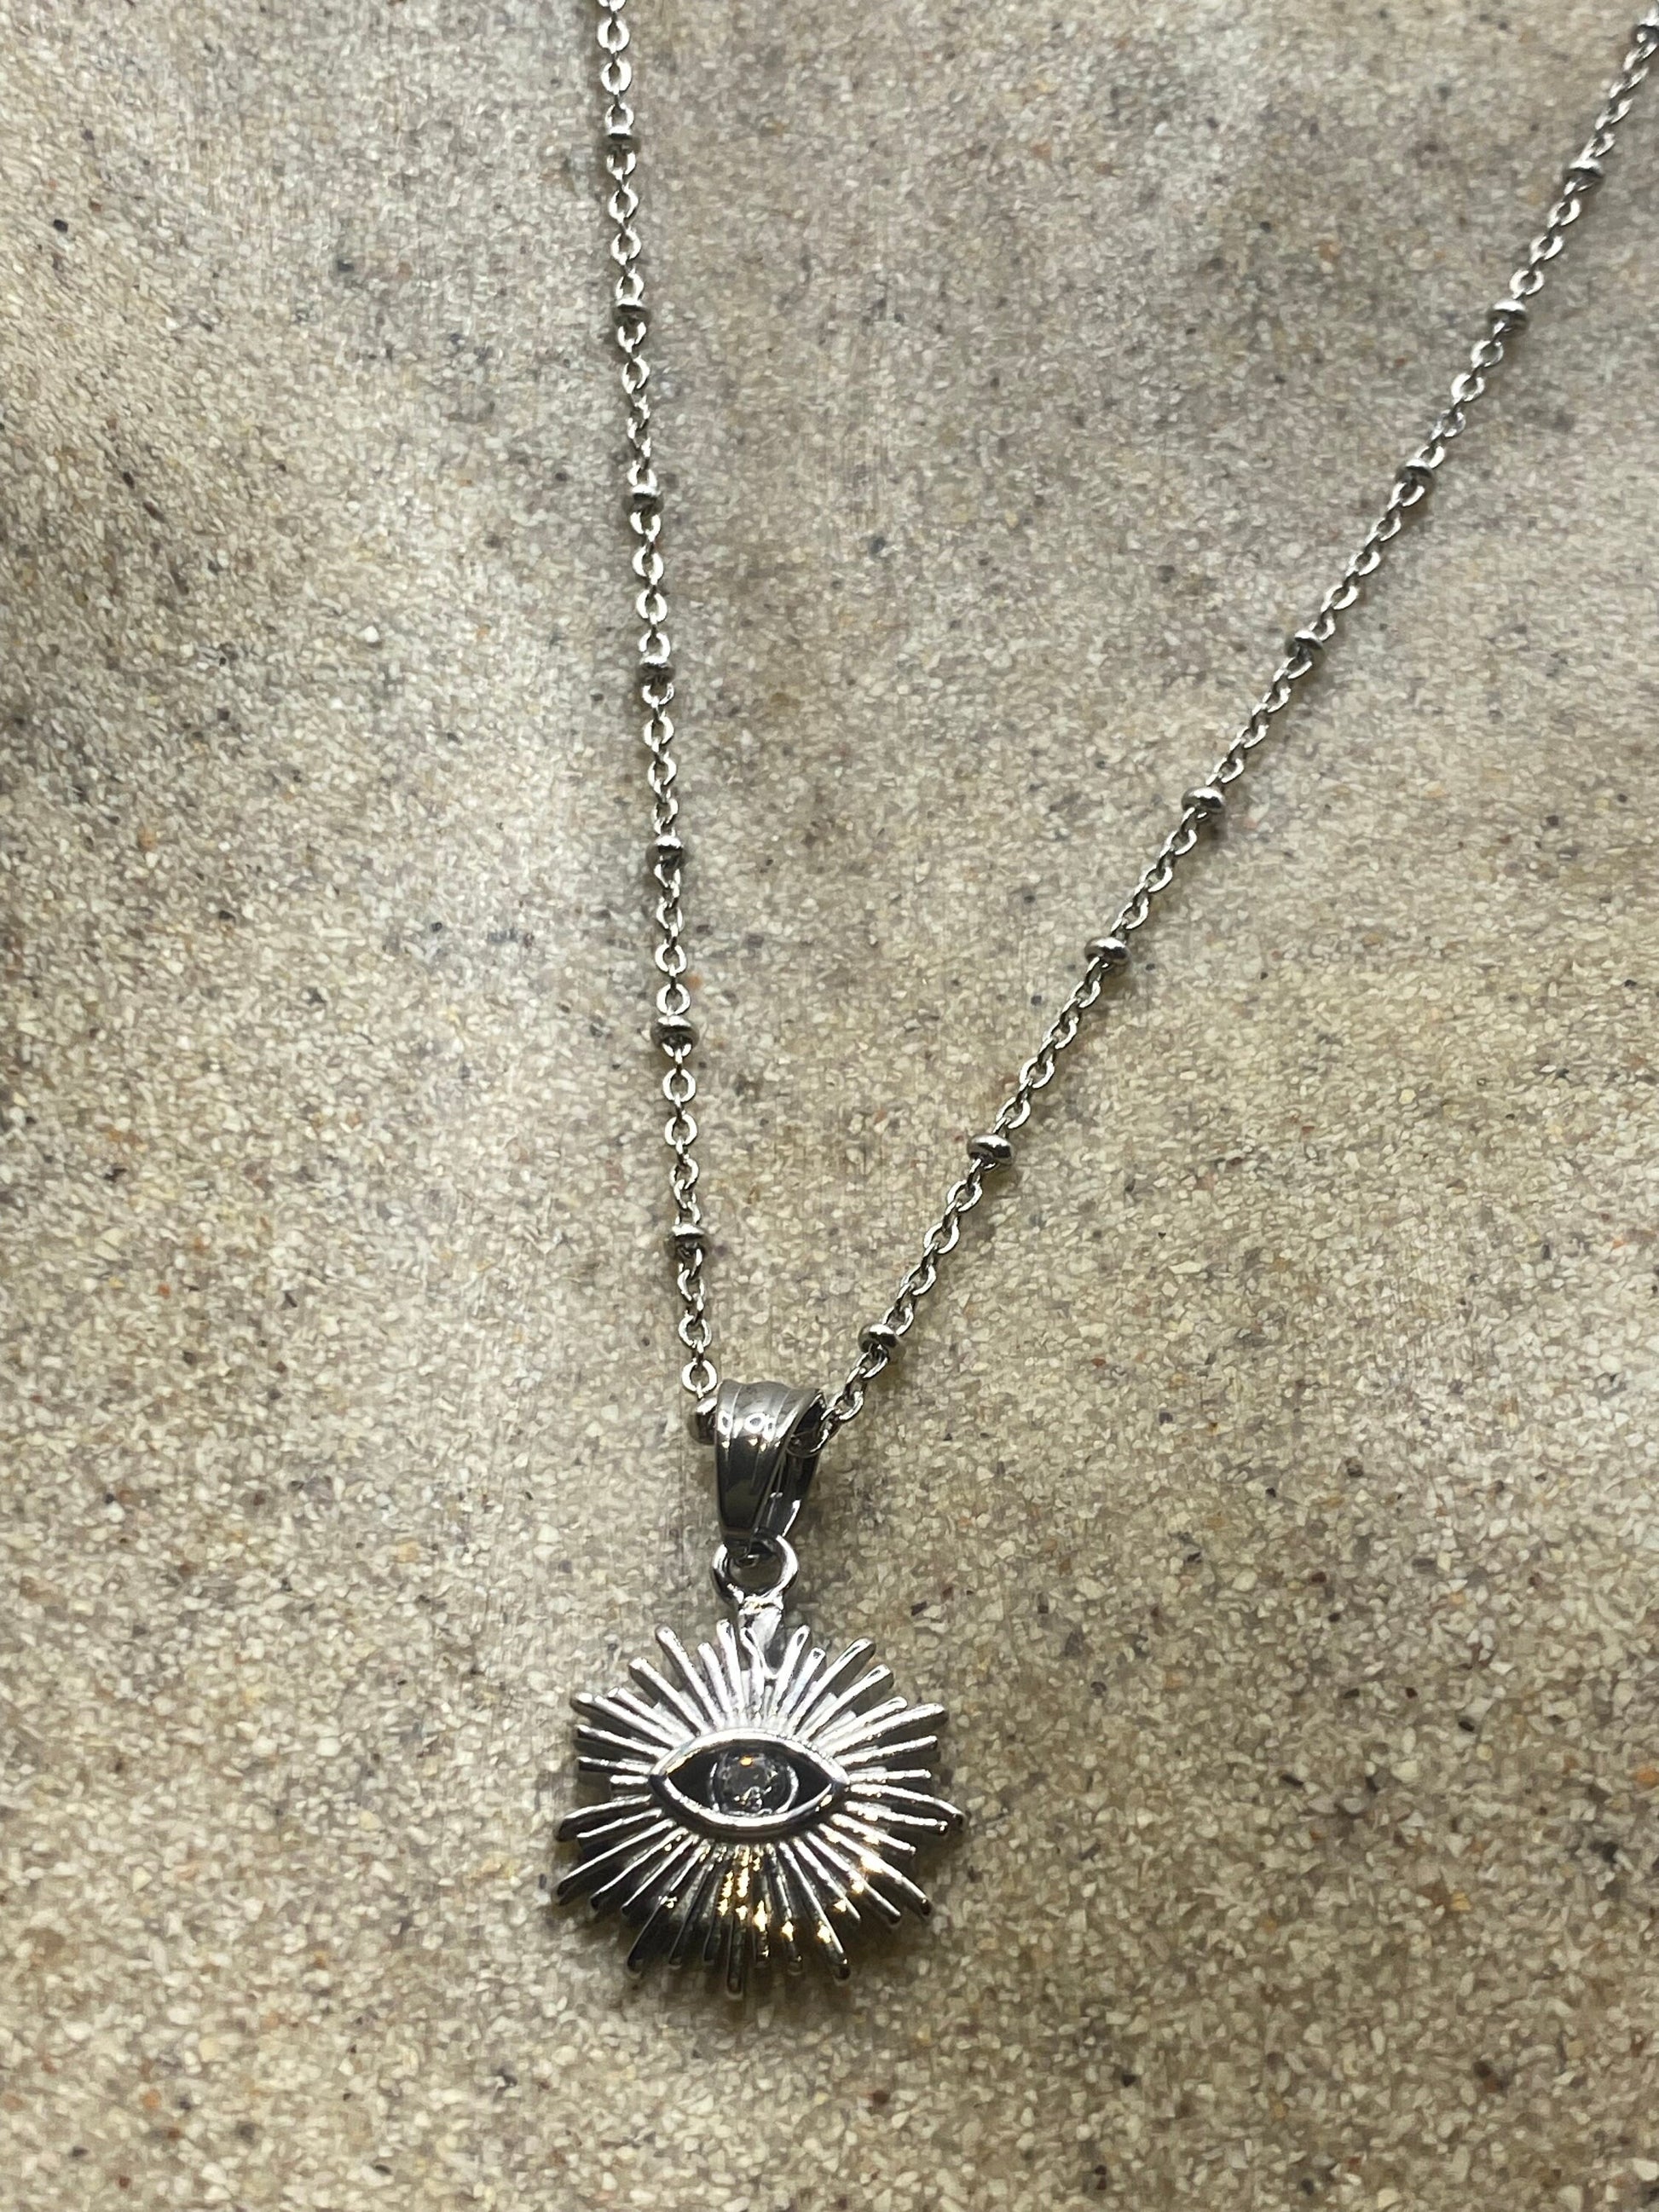 Vintage Evil Eye Choker Pendant Necklace Silver Stainless Steel